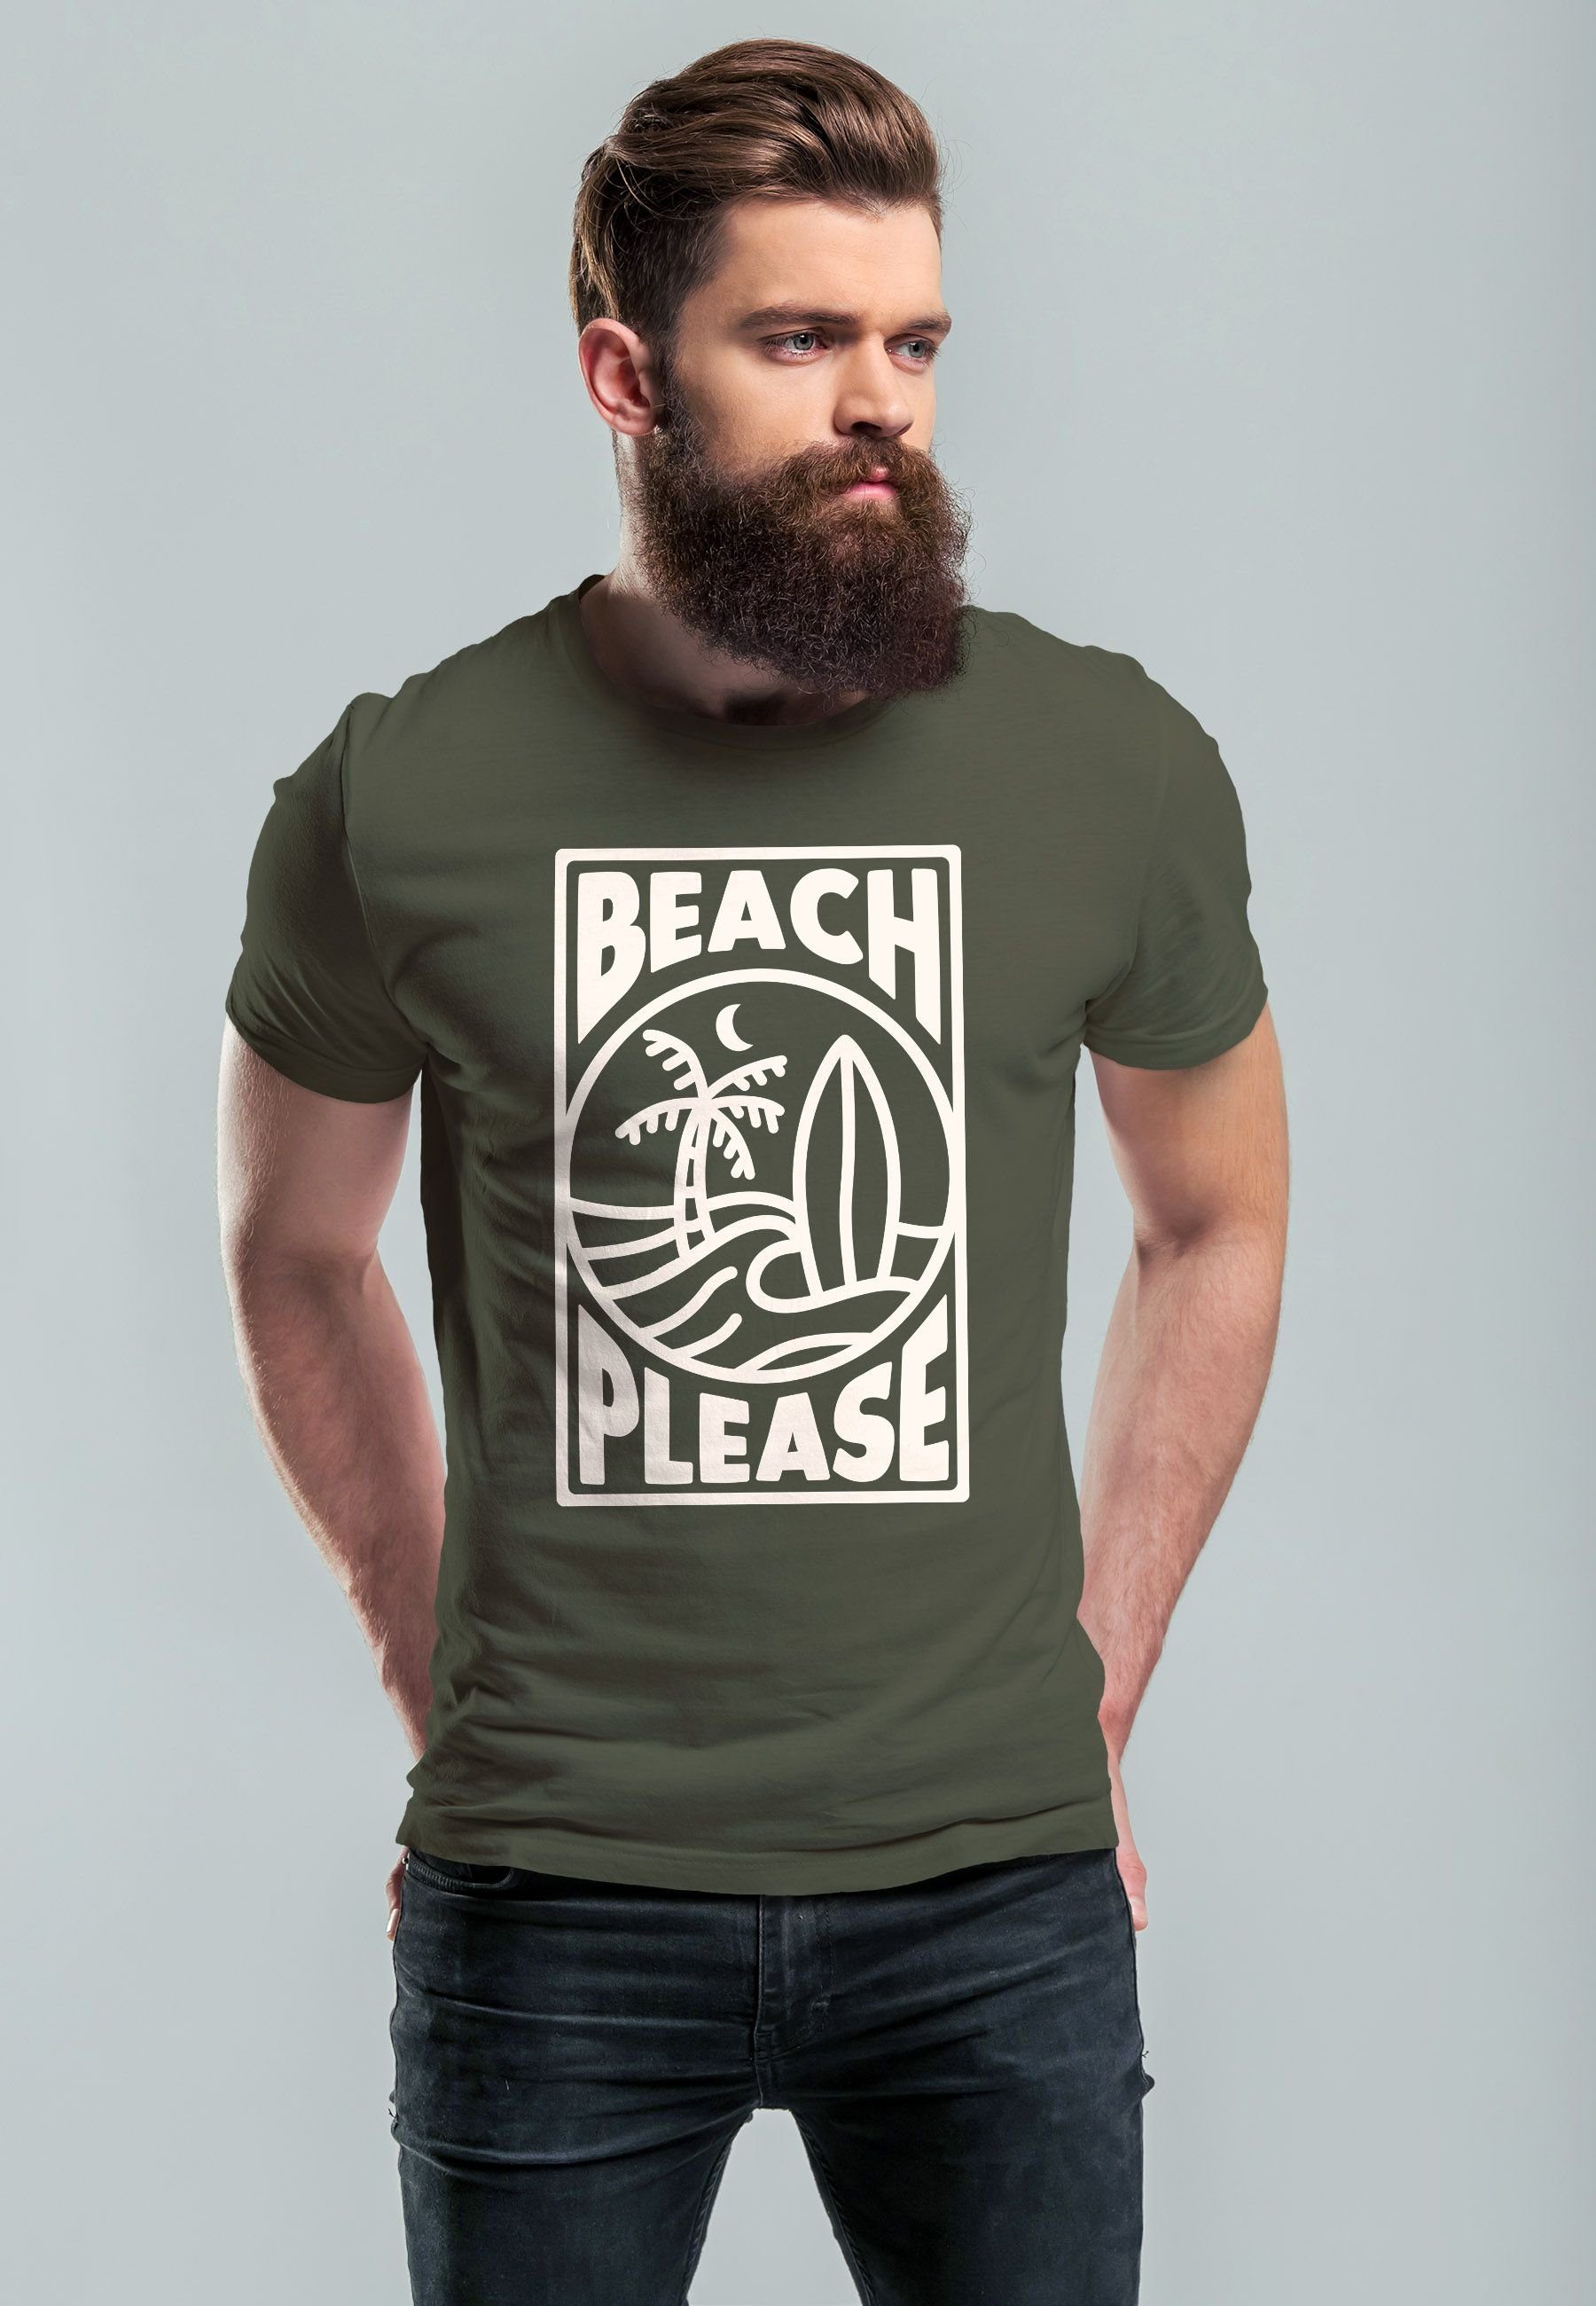 Beach Surfboard T-Shirt Welle Please army Print-Shirt Print mit Print Surfing Wave Neverless Herren Sommer